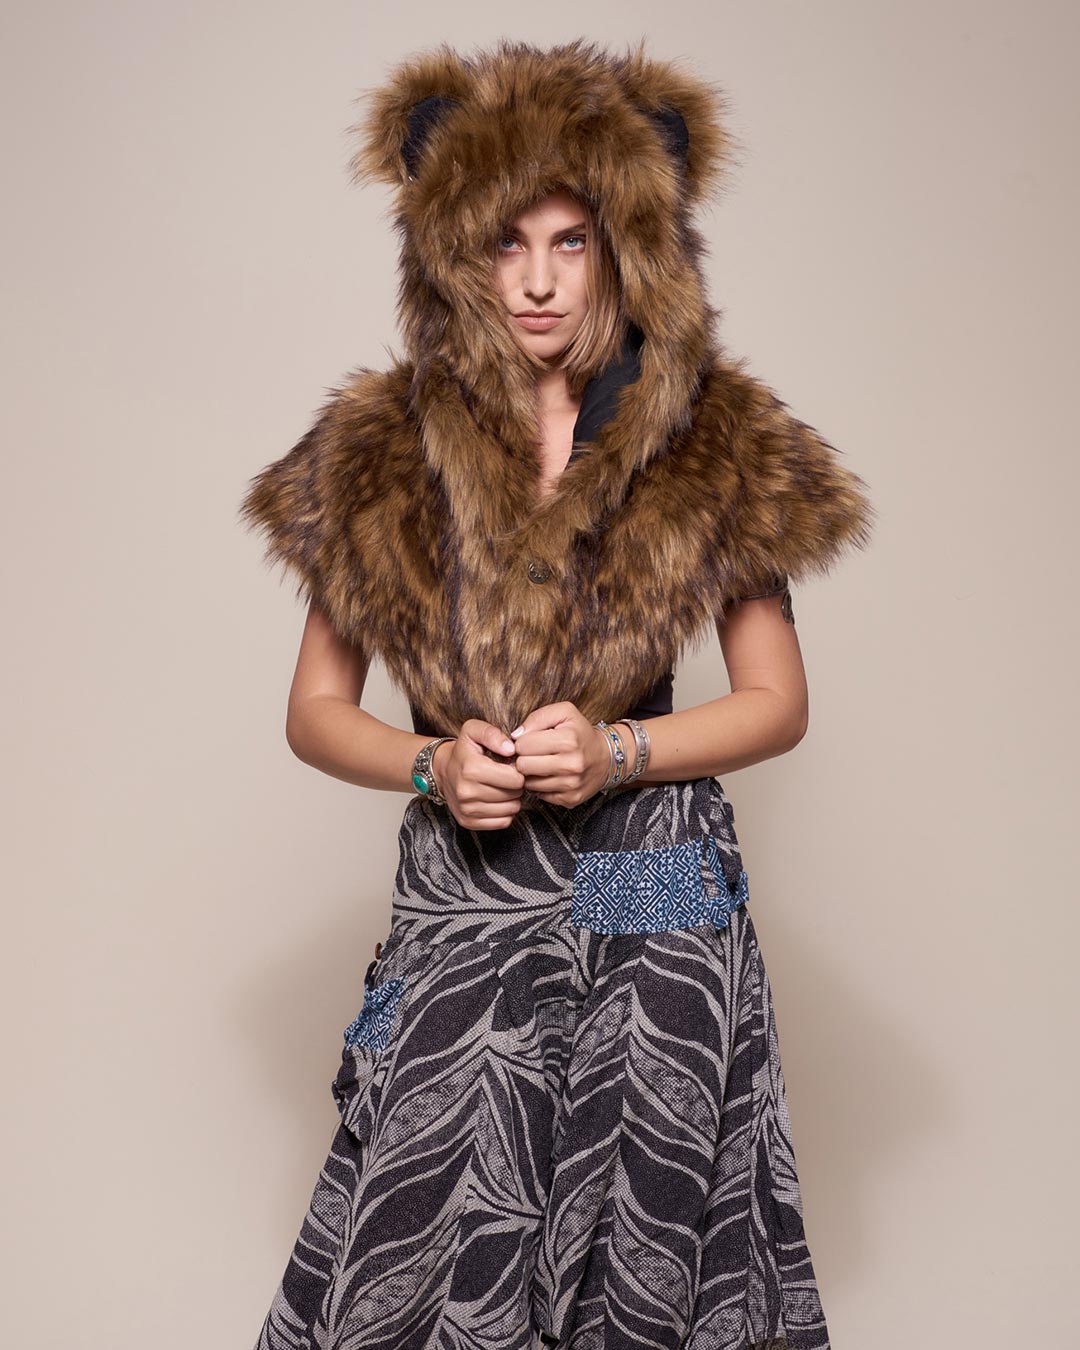 Faux Fur Shawl in Grizzly Bear Design on Female Model